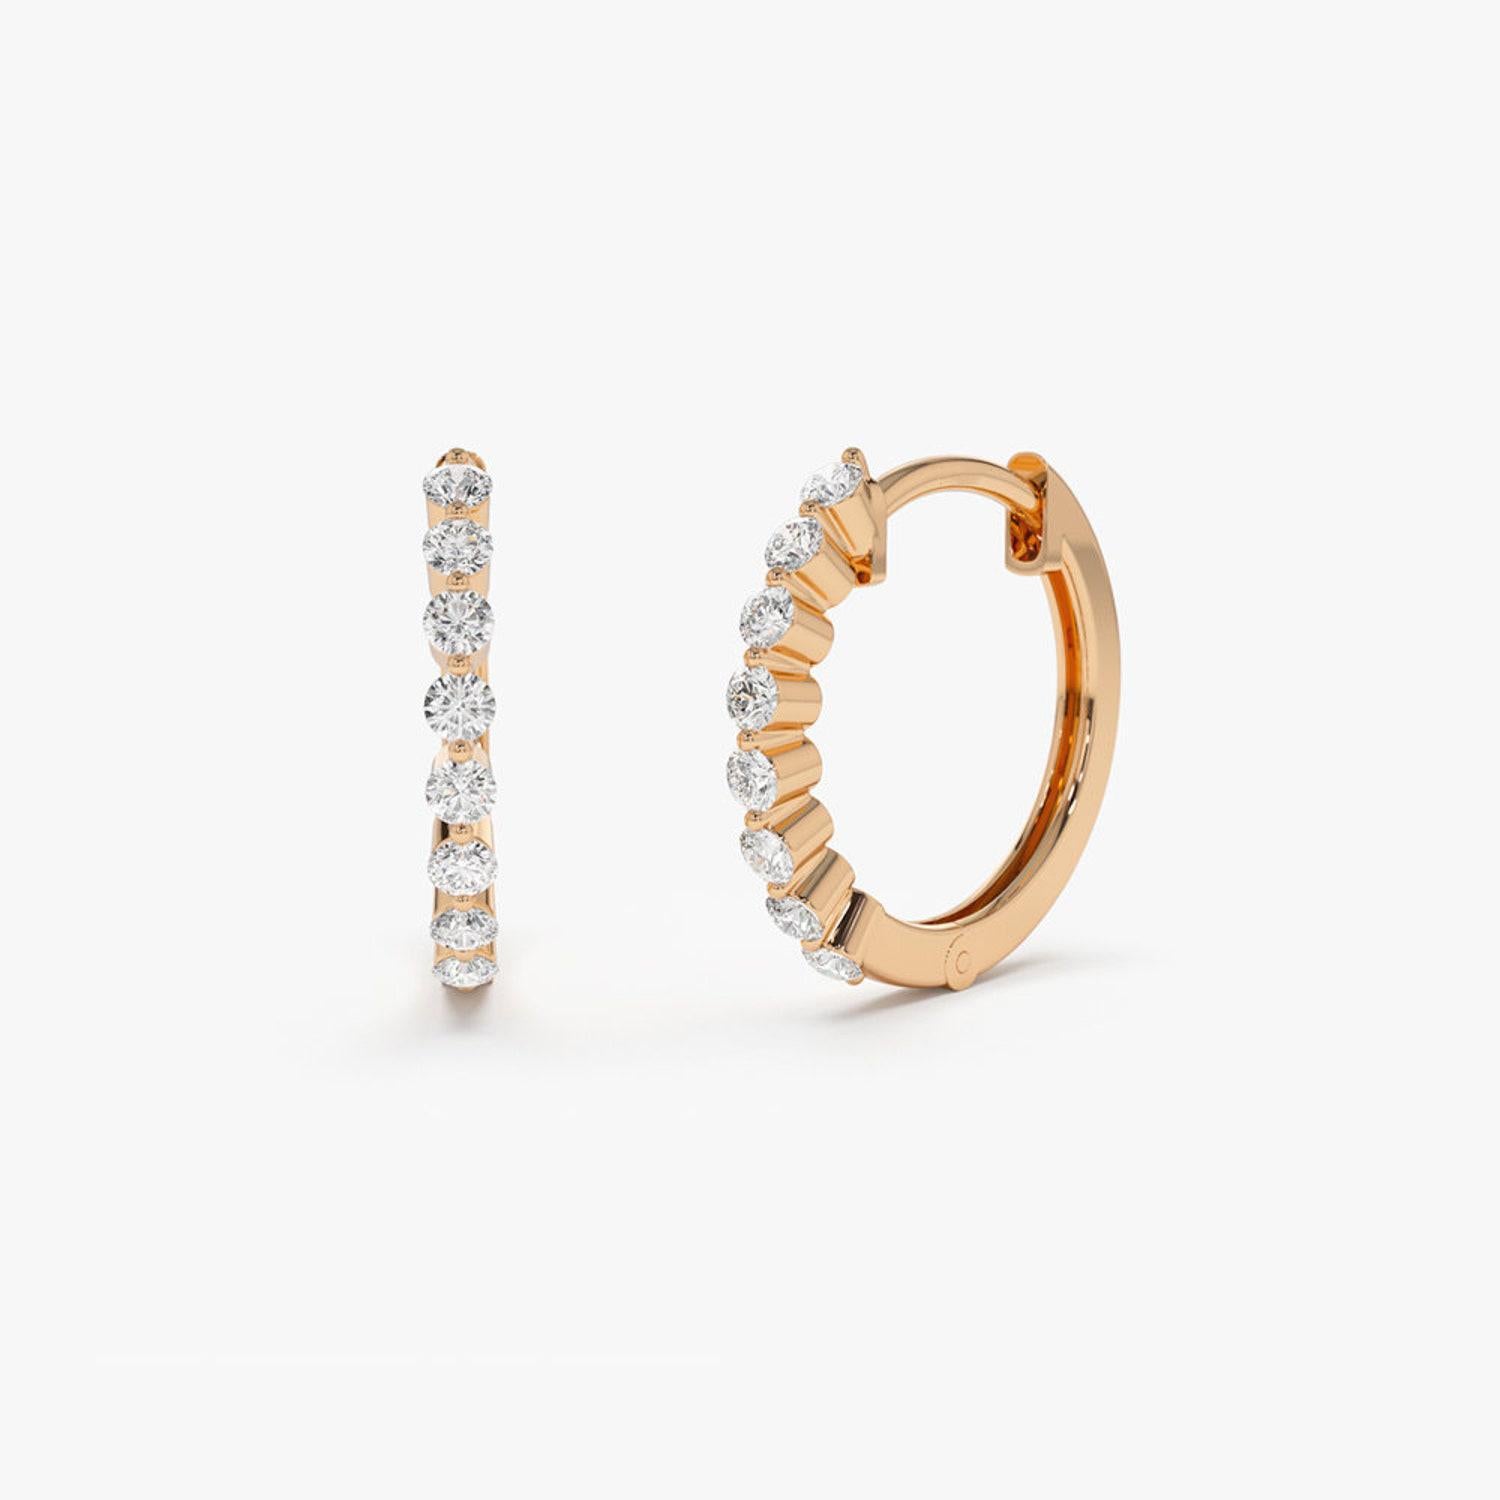 Brilliant Cut 14k Solid Gold Shared Prong Diamond Hoop Earrings / Diamond Huggie Earrings For Sale